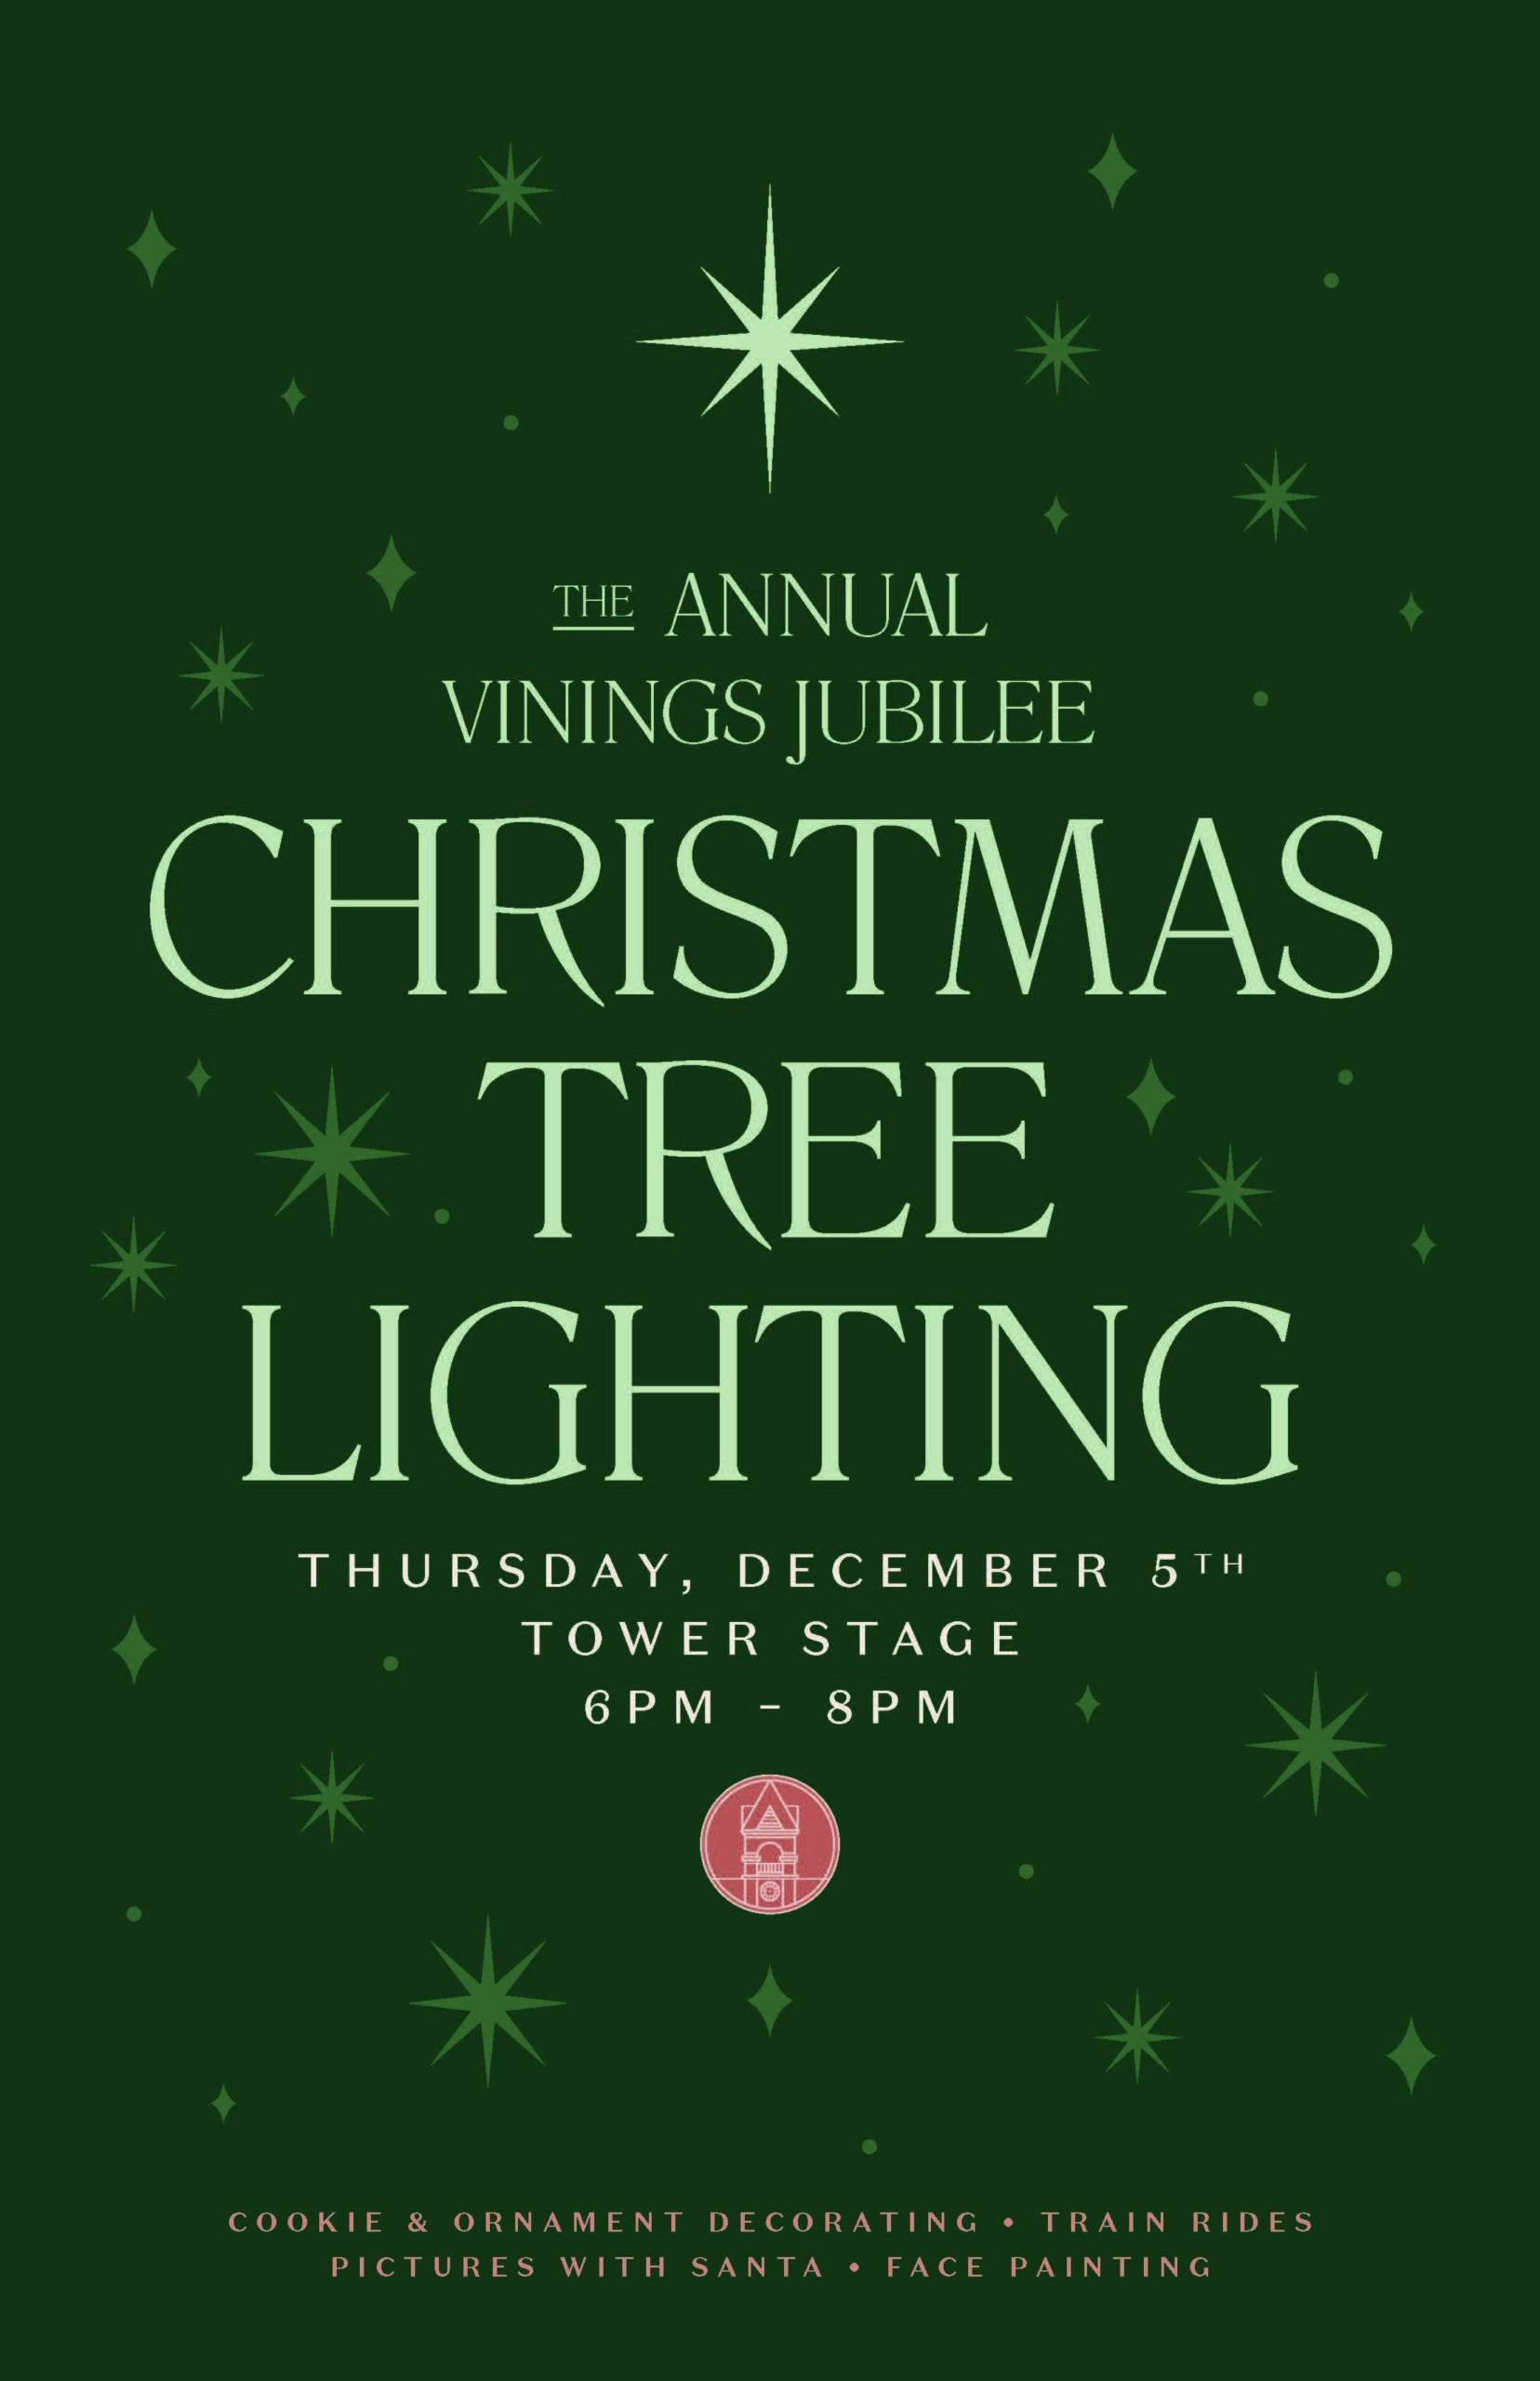 PACES-117_2019_08_VJ Christmas Tree Lighting_11x17_R1_Page_1